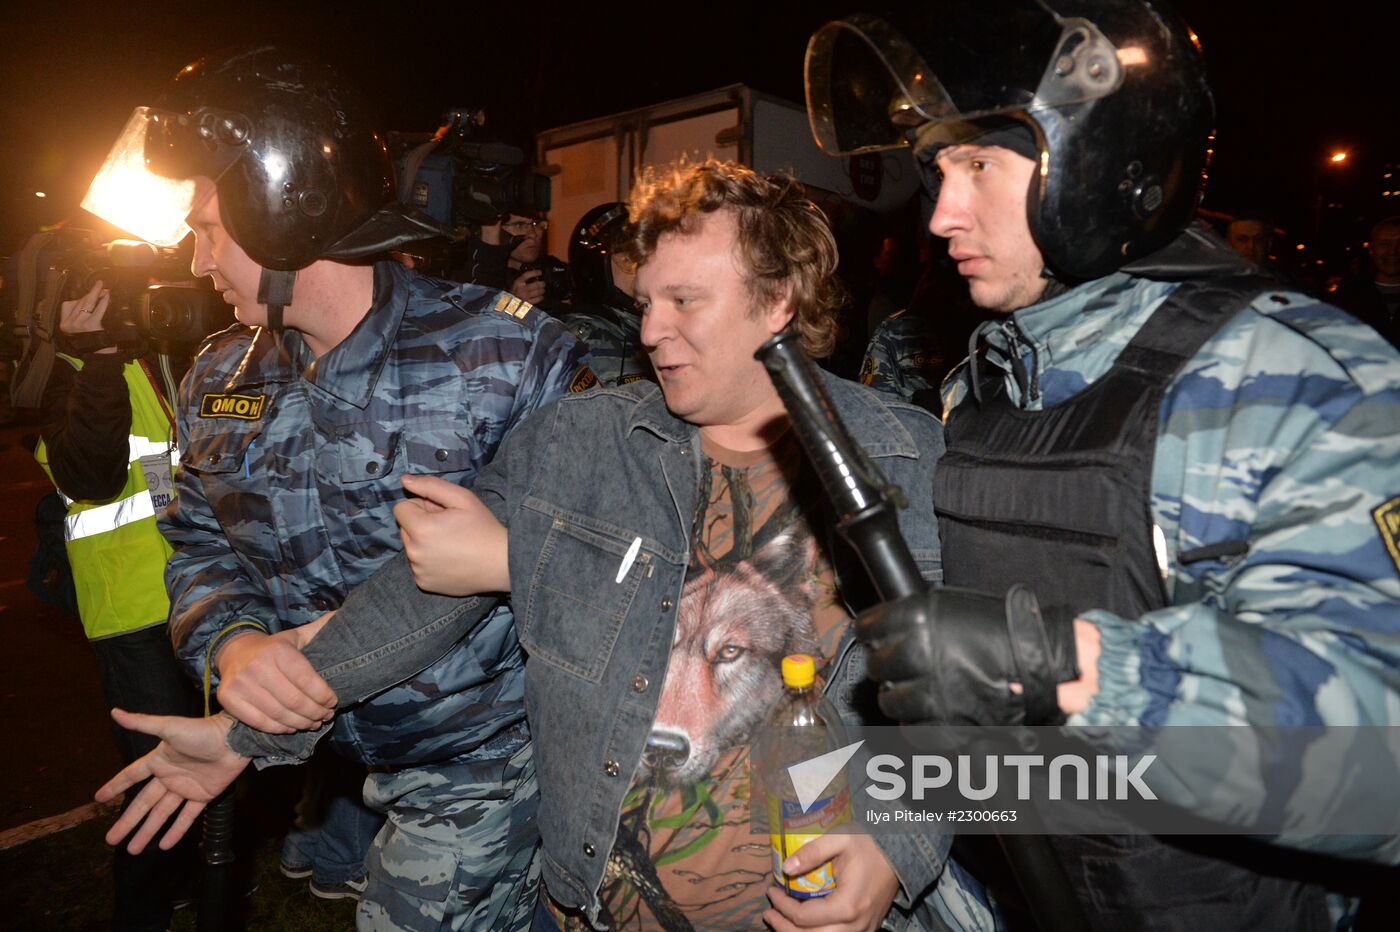 Disturbances in Moscow's Biryulyovo district